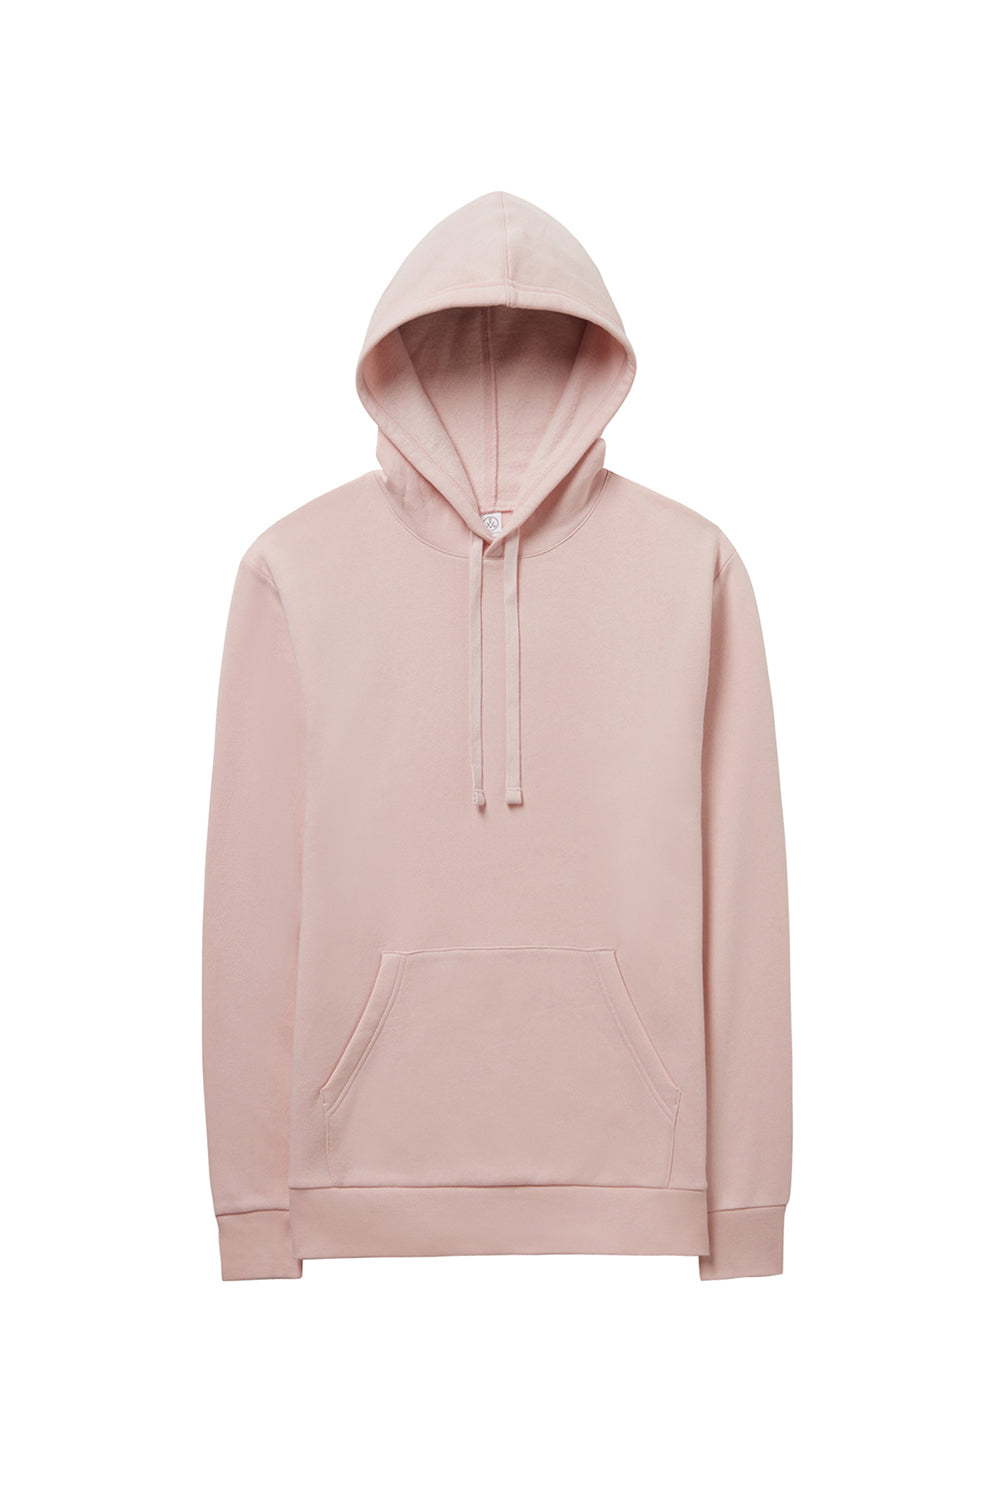 Alternative 8804PF Mens Eco Cozy Fleece Hooded Sweatshirt Hoodie Faded Pink Flat Front